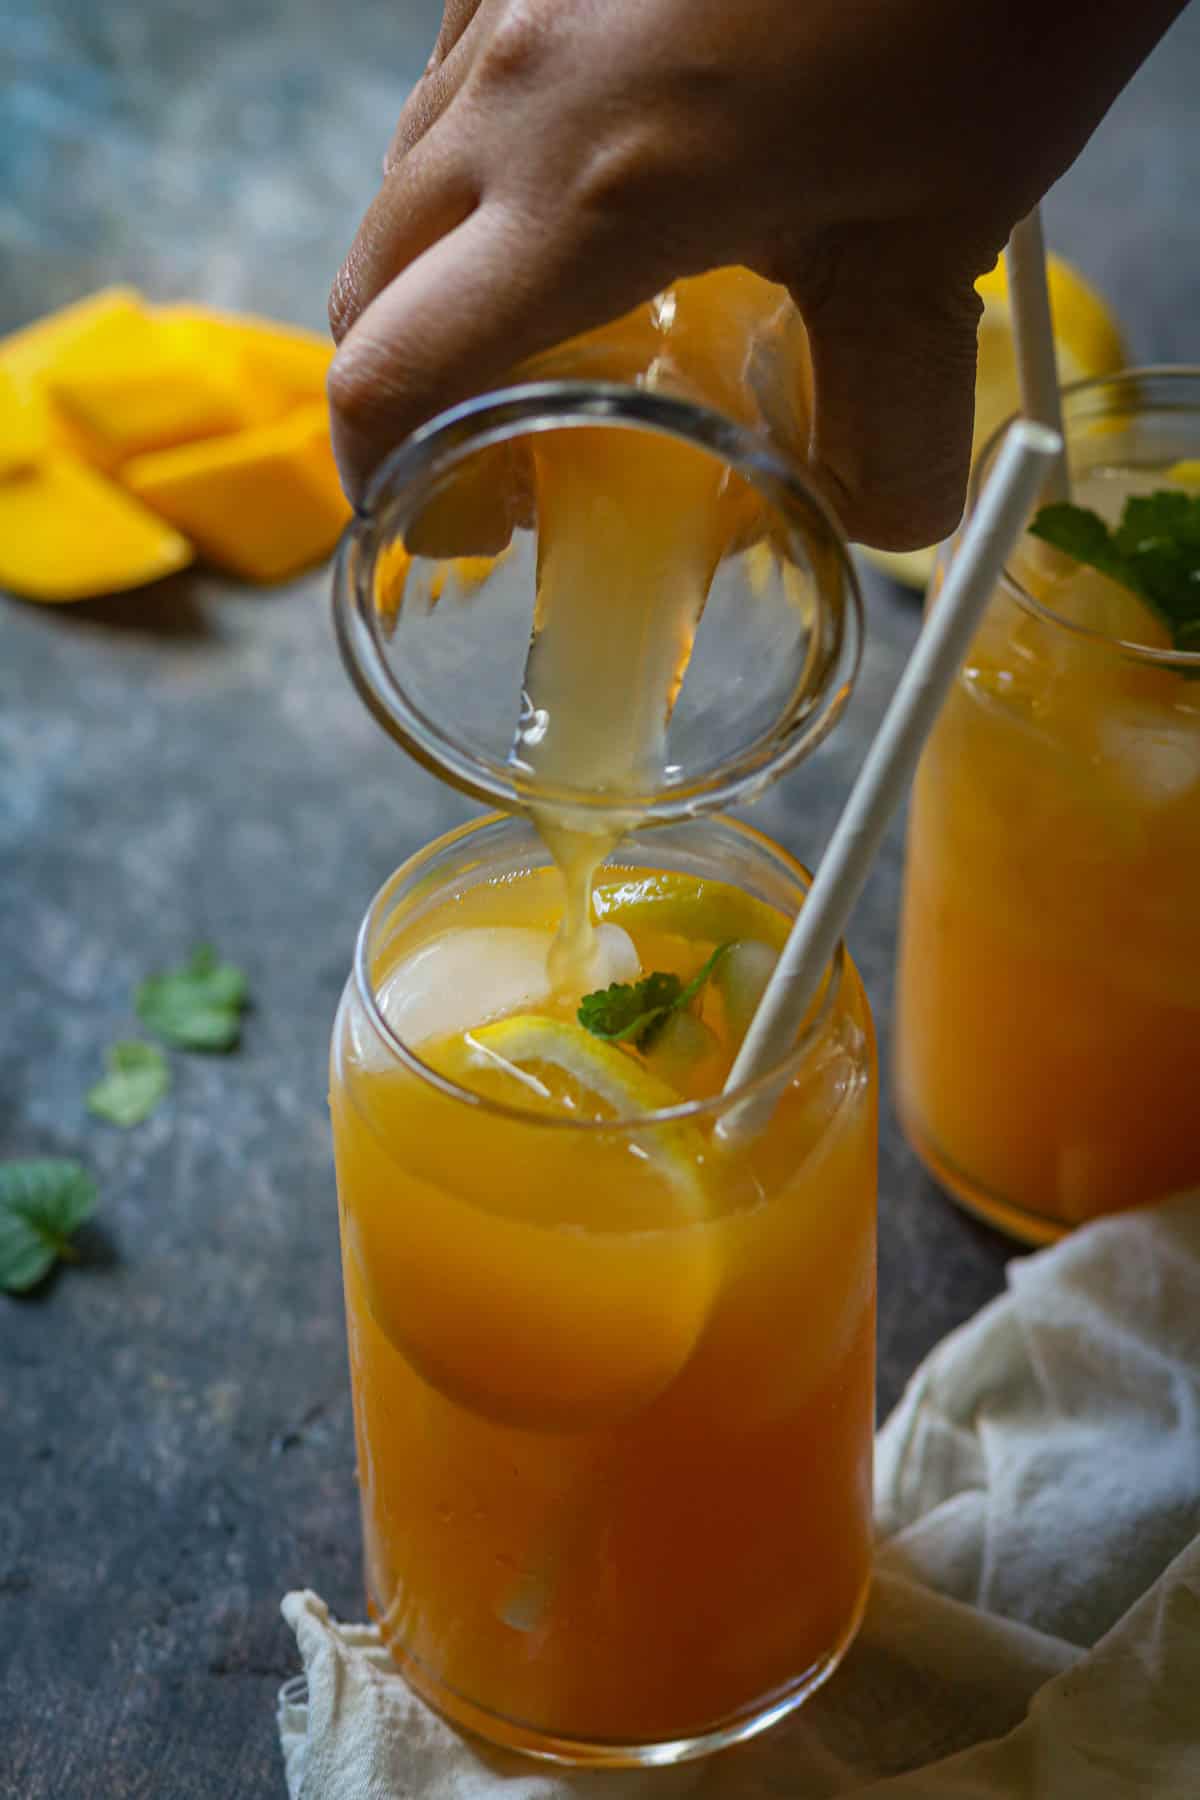 Pouring peach mango tea in glasses.